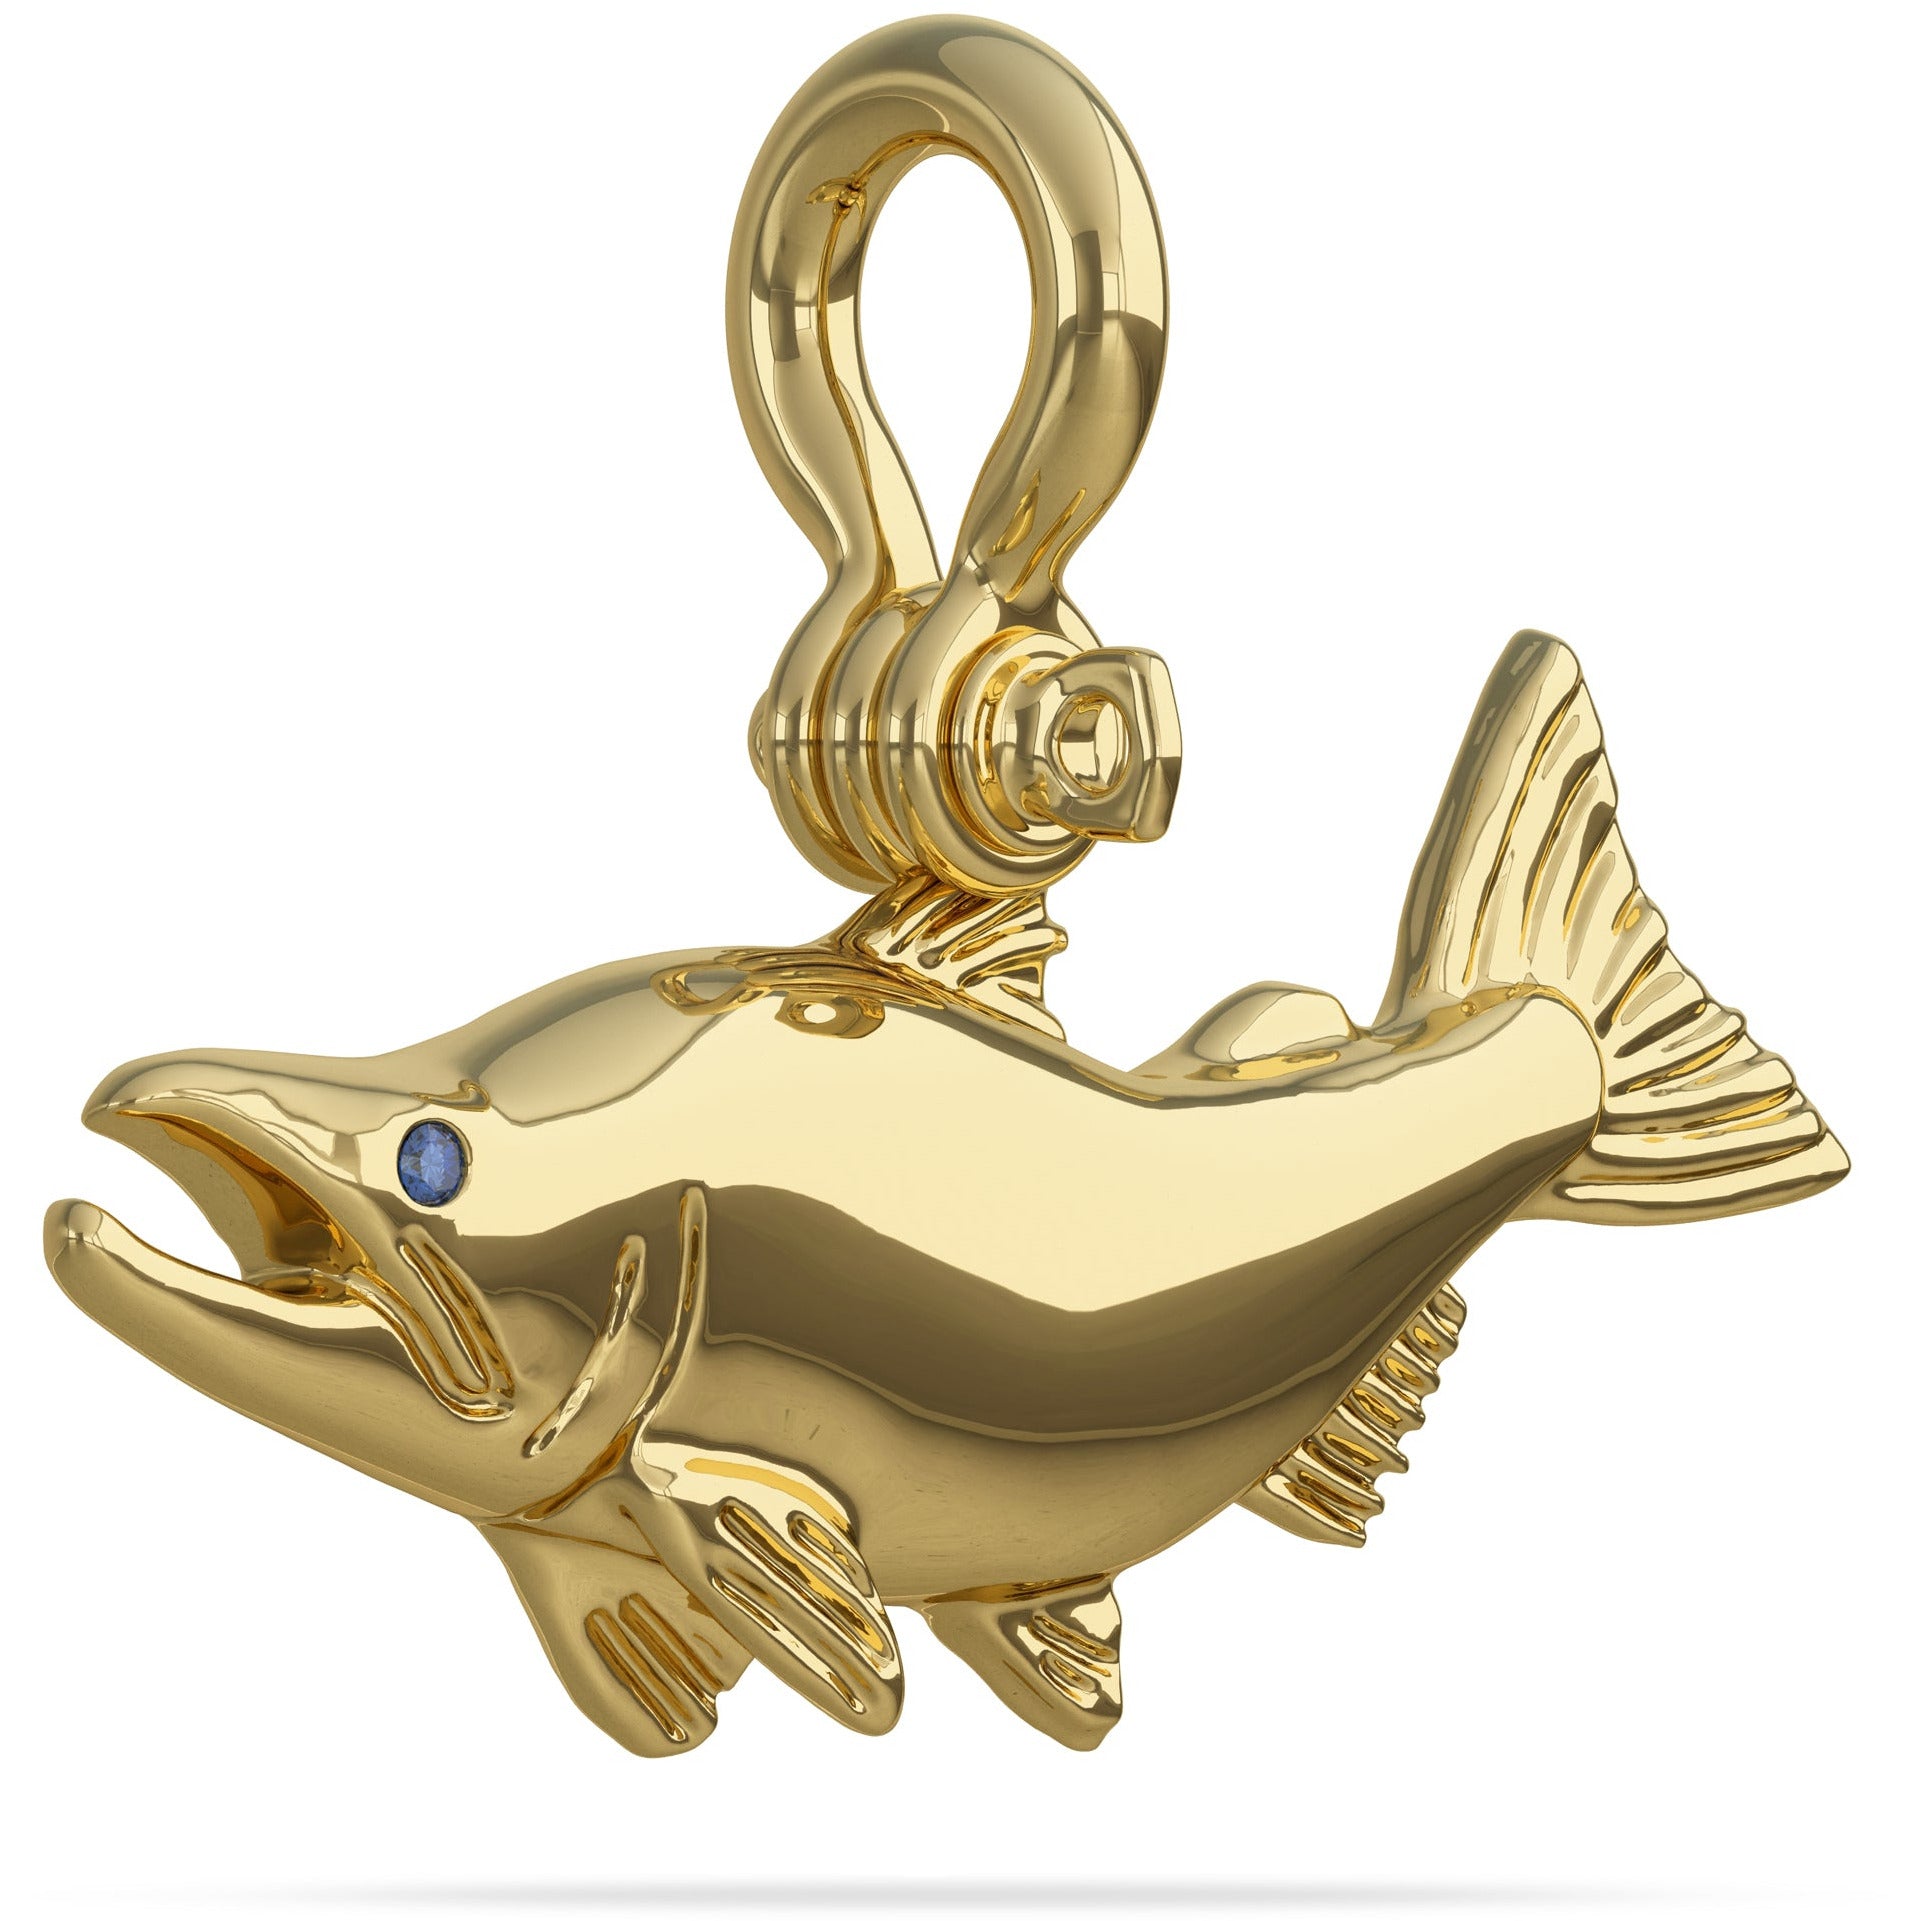 Solid 14k Gold Sockeye Salmon Pendant High Polished Mirror Finish With Blue Sapphire Eye with A Mariner Shackle Bail Custom Designed By Nautical Treasure Jewelry In The Florida Keys Islamorada fly fishing 